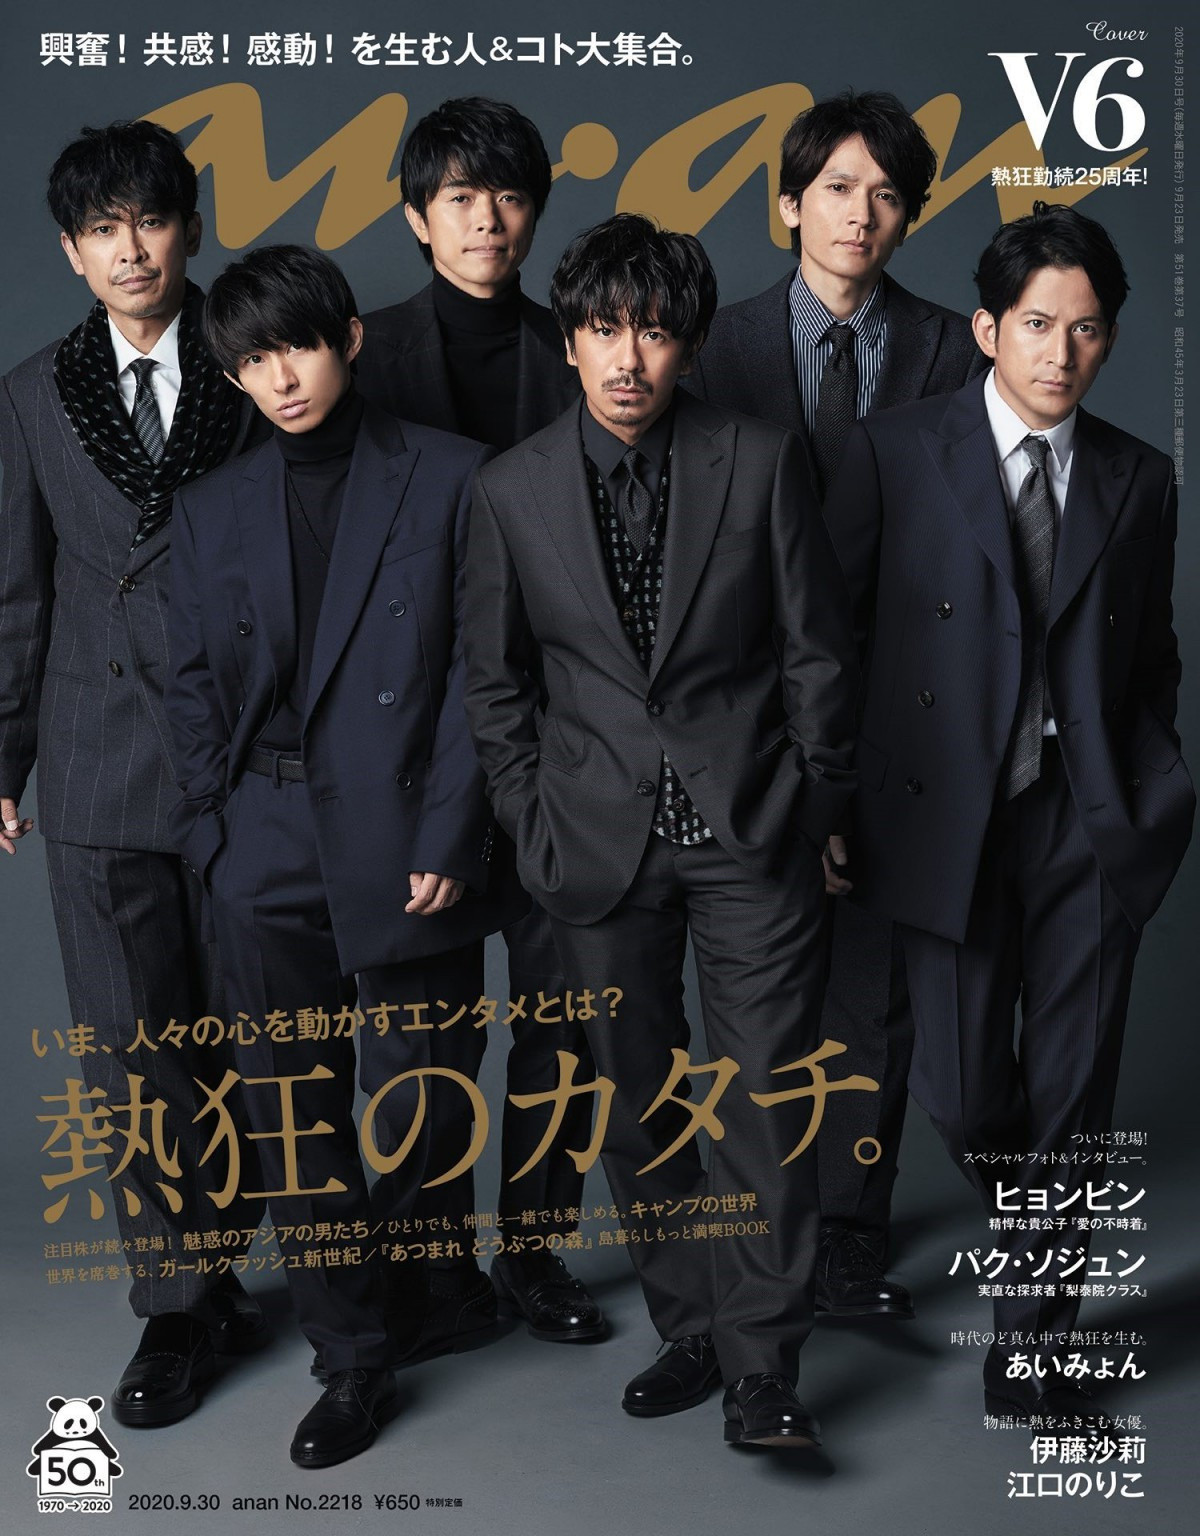 V6 Anan 表紙に 渋カッコいい モードスーツで登場 25周年でファンへ感謝のメッセージ Oricon News